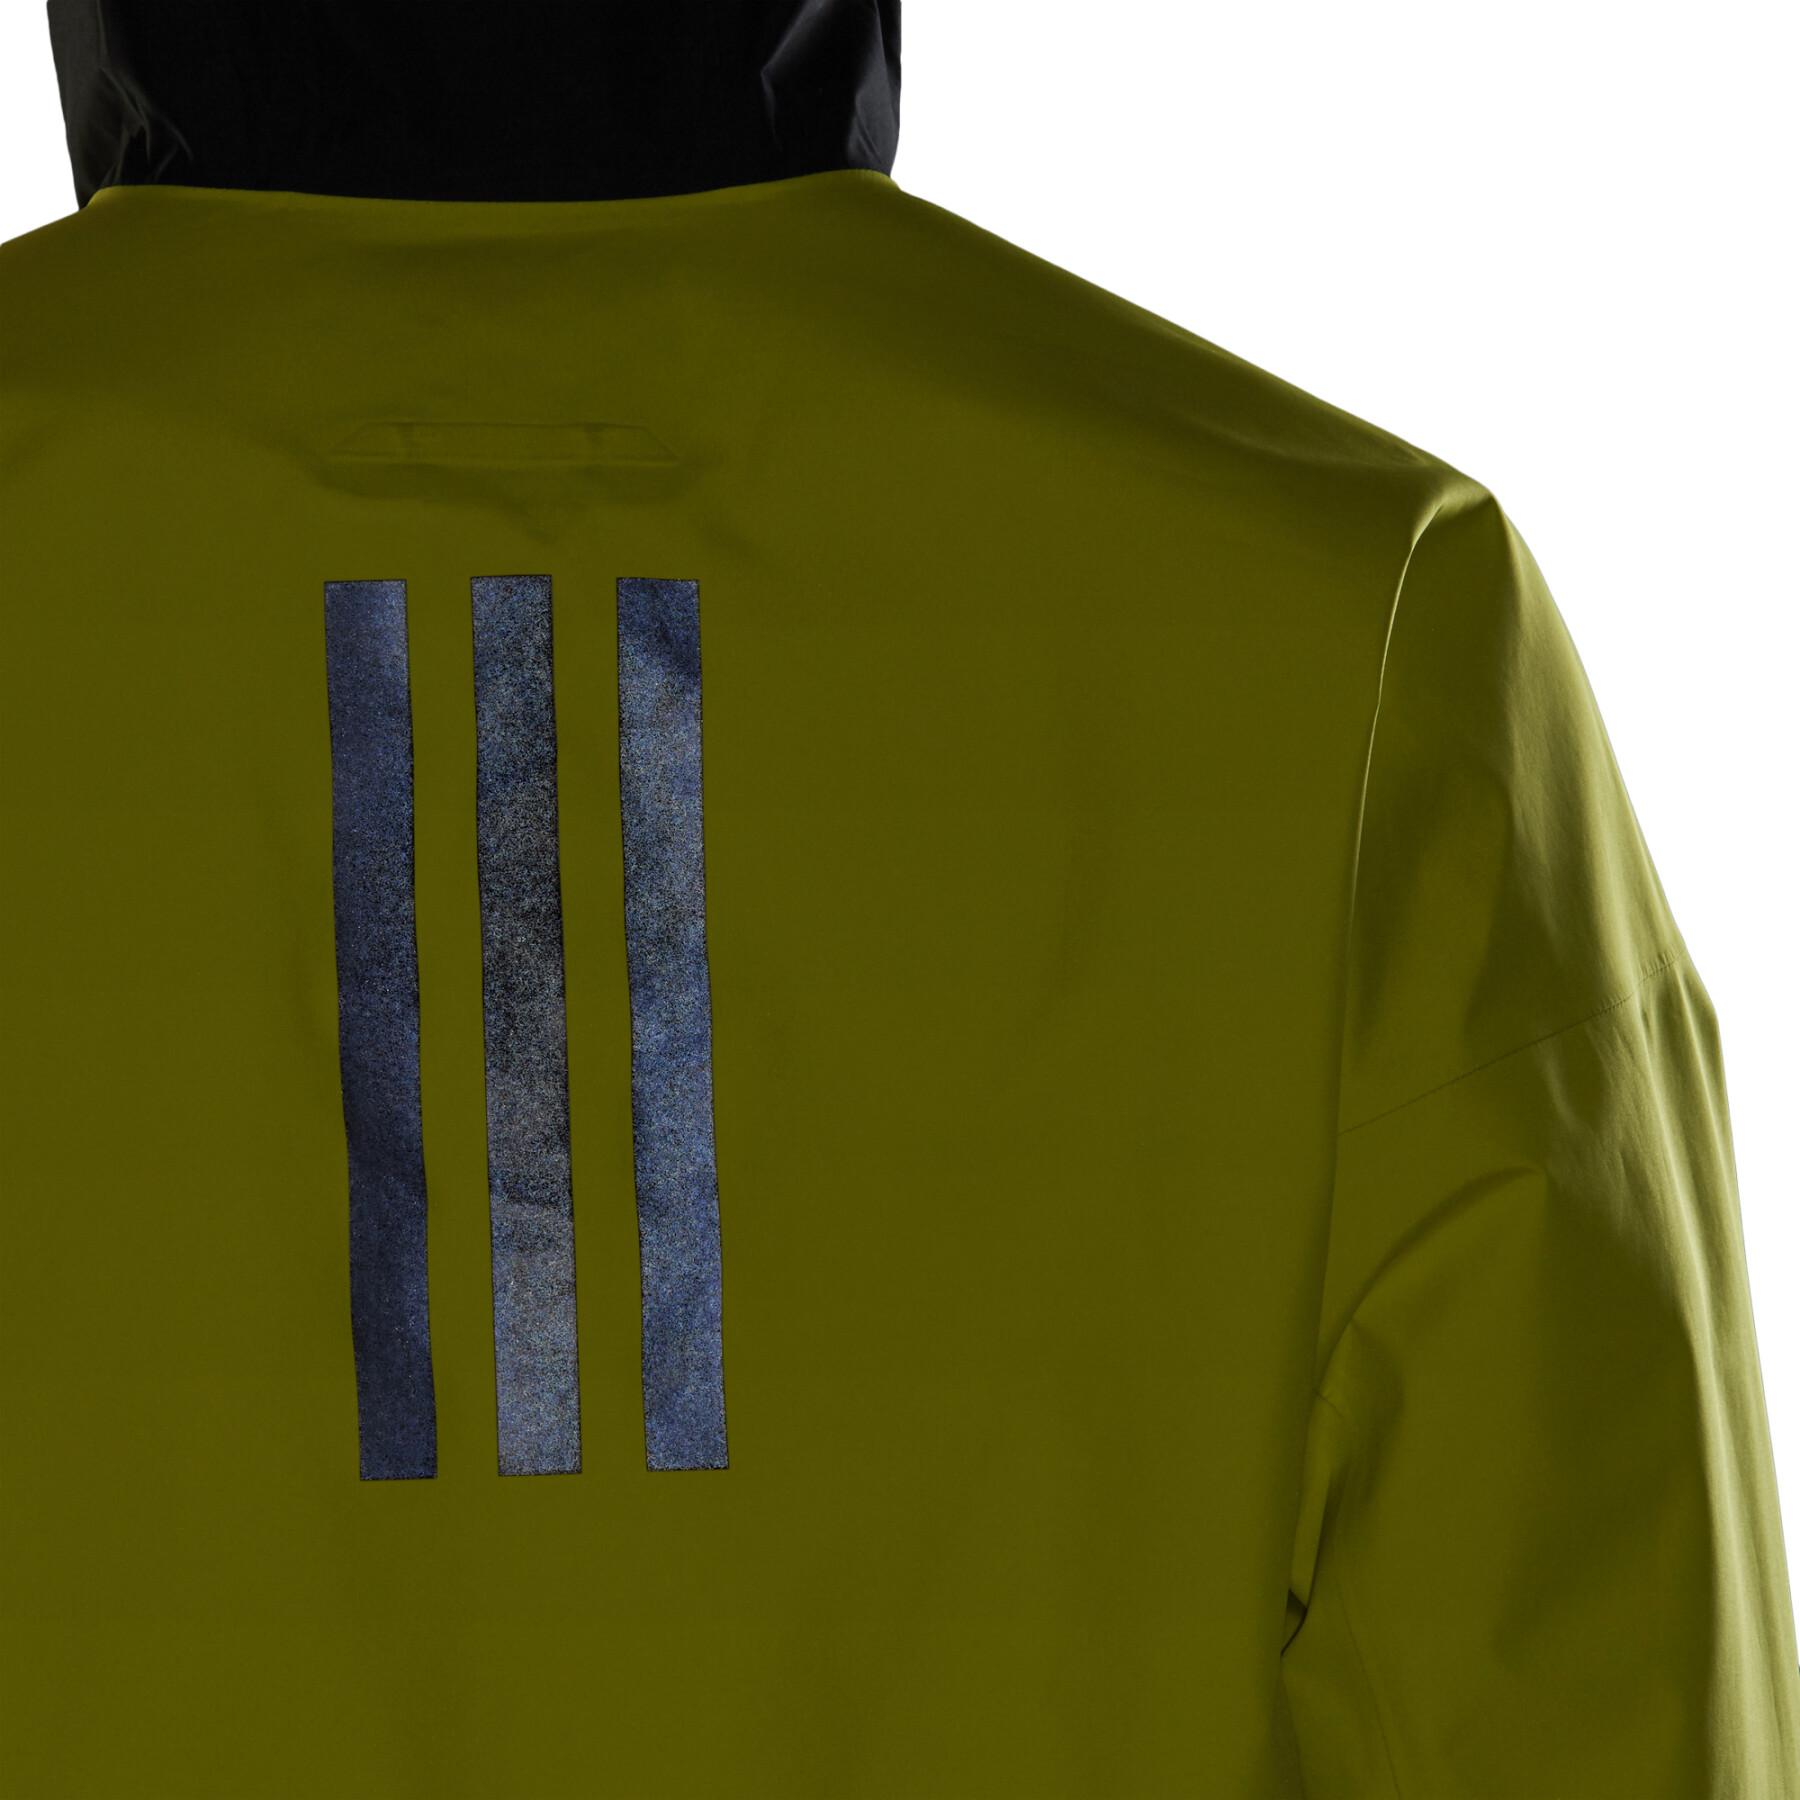 Rain jacket adidas Terrex Gore-Tex Paclite